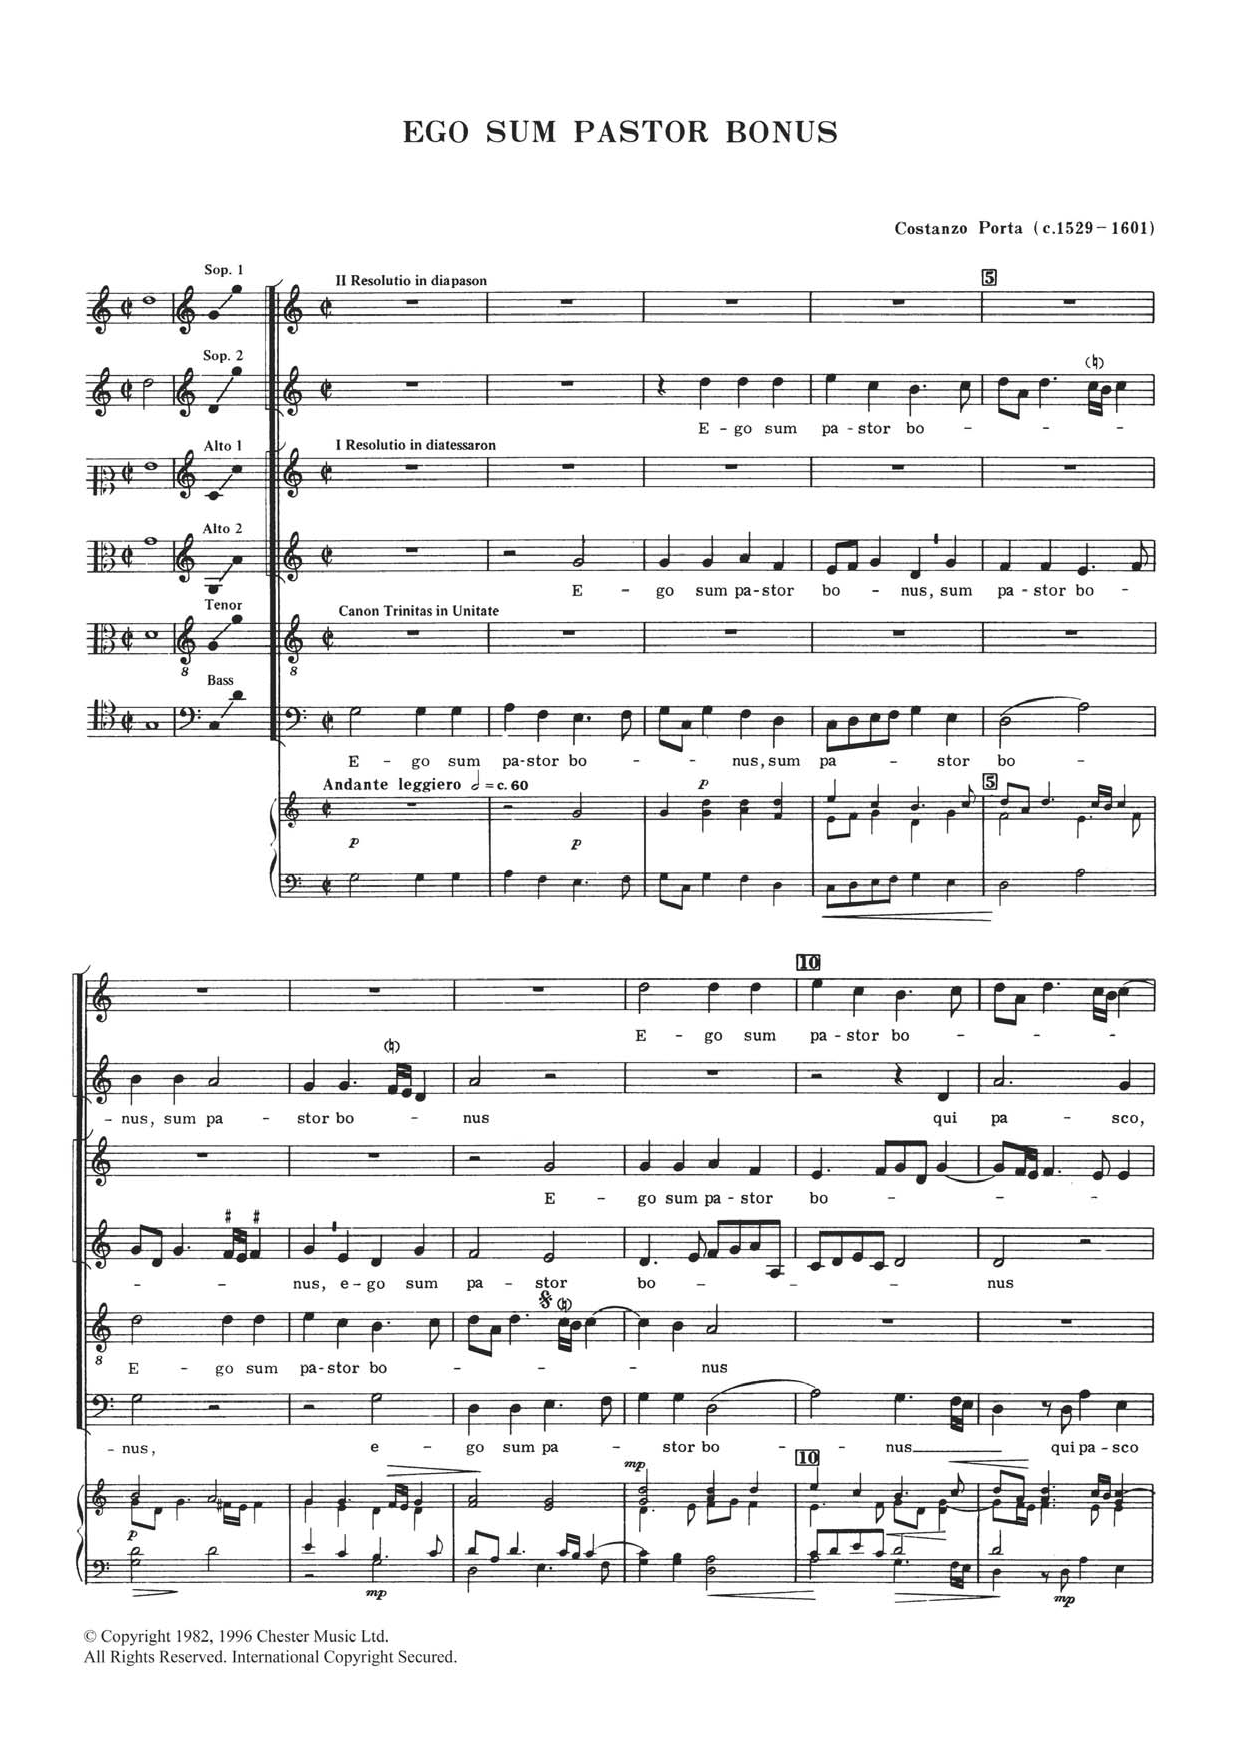 Costanzo Porta Ego Sum Pastor Bonus Sheet Music Notes & Chords for Choral SAATB - Download or Print PDF